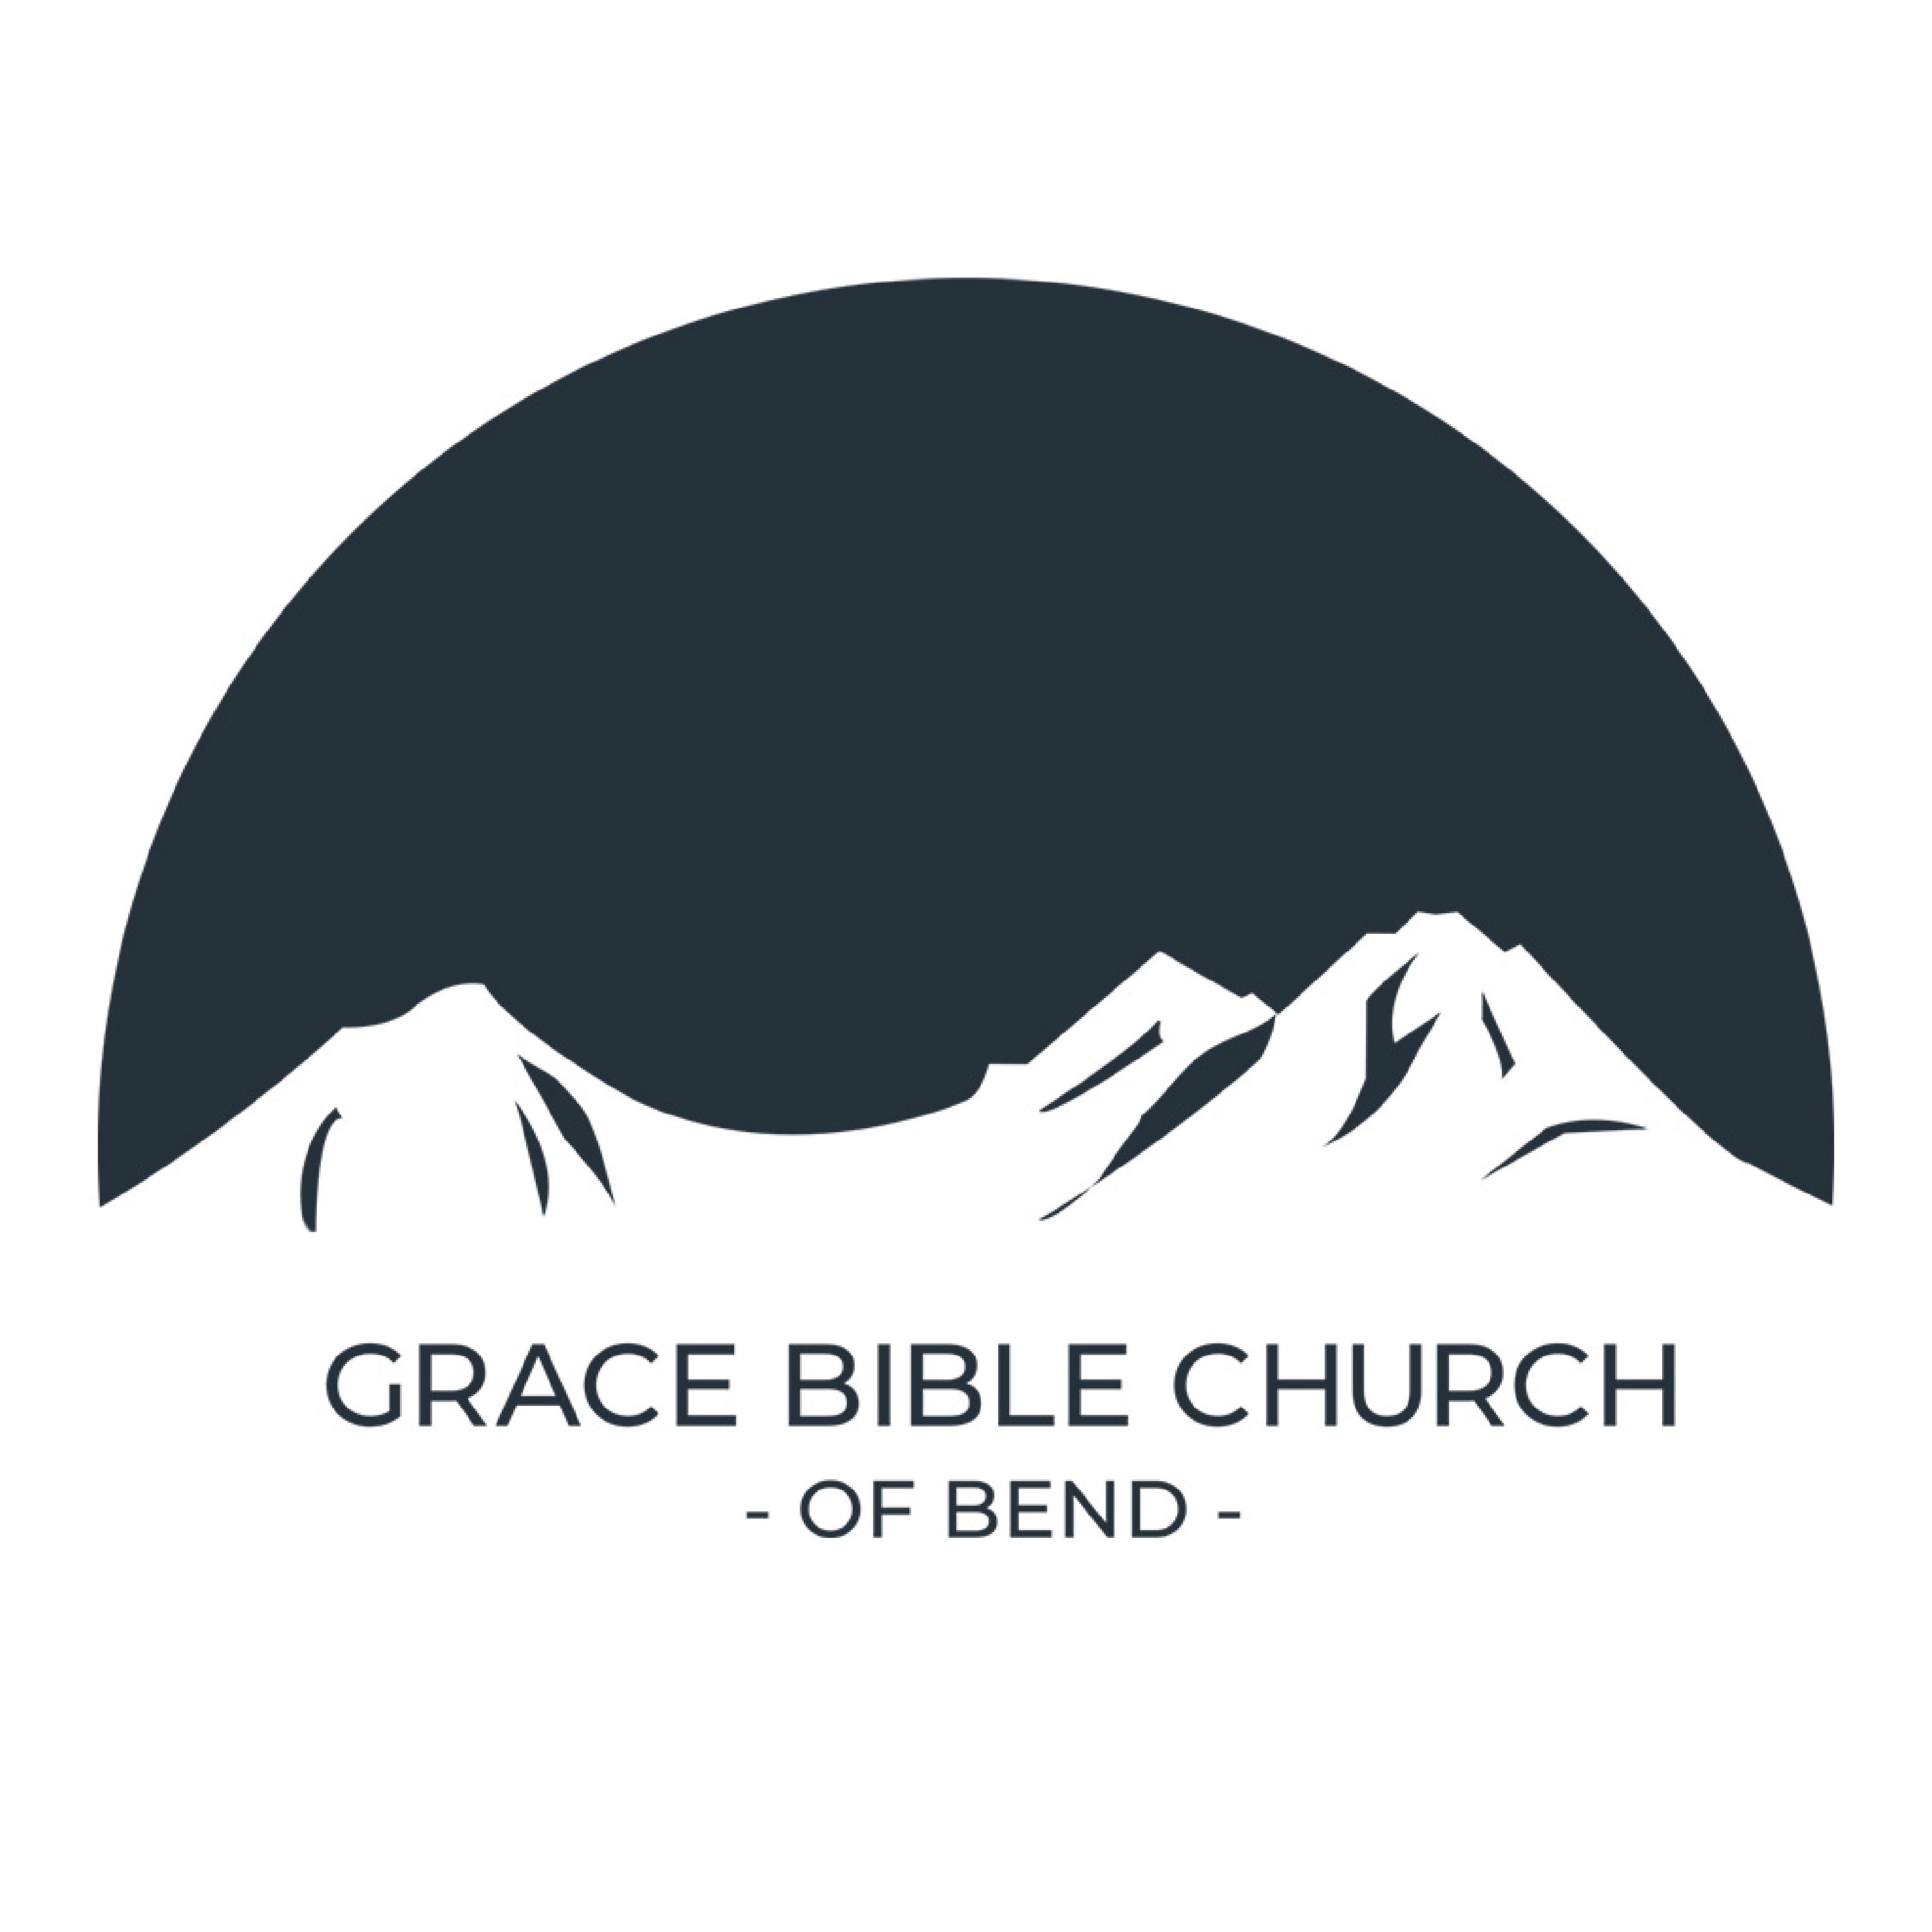 Grace Bible Church of Bend